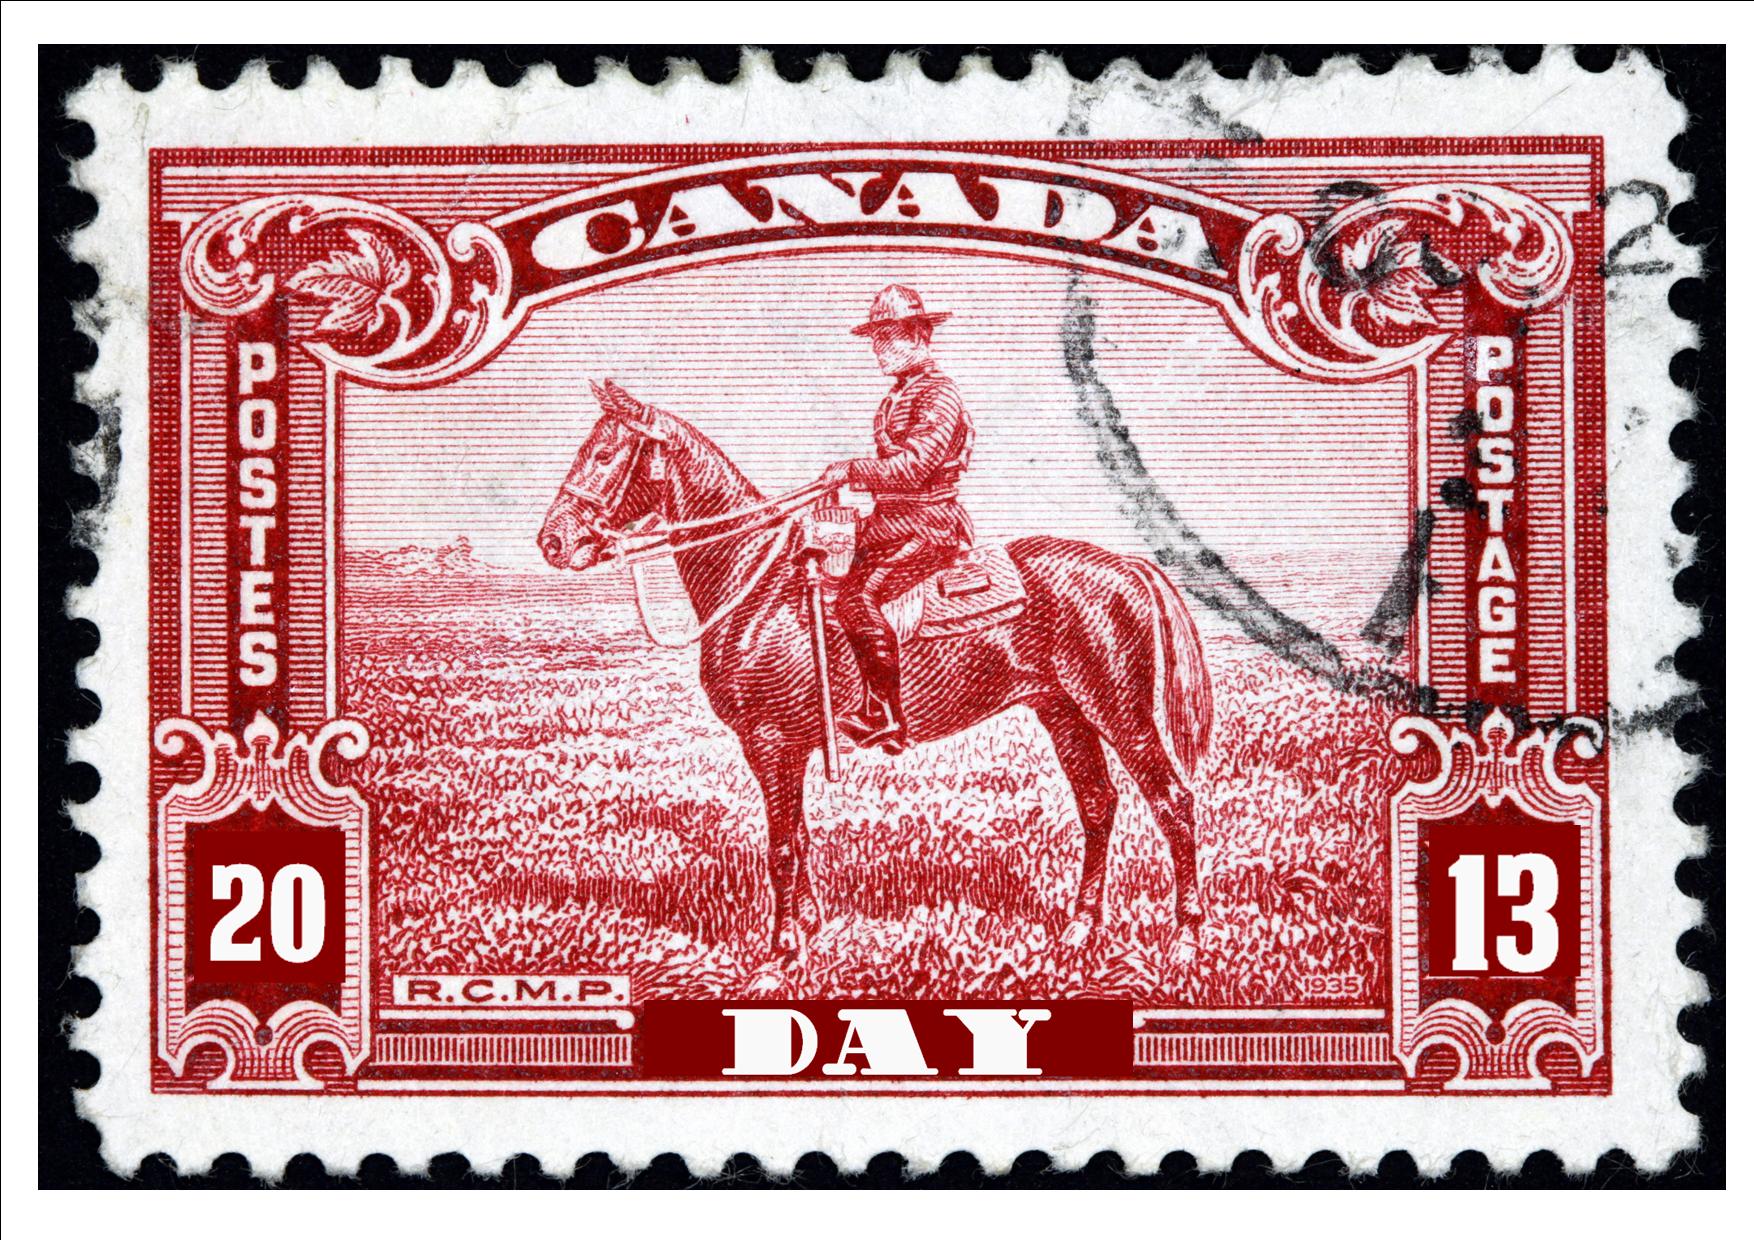 Happy Canada Day 2013